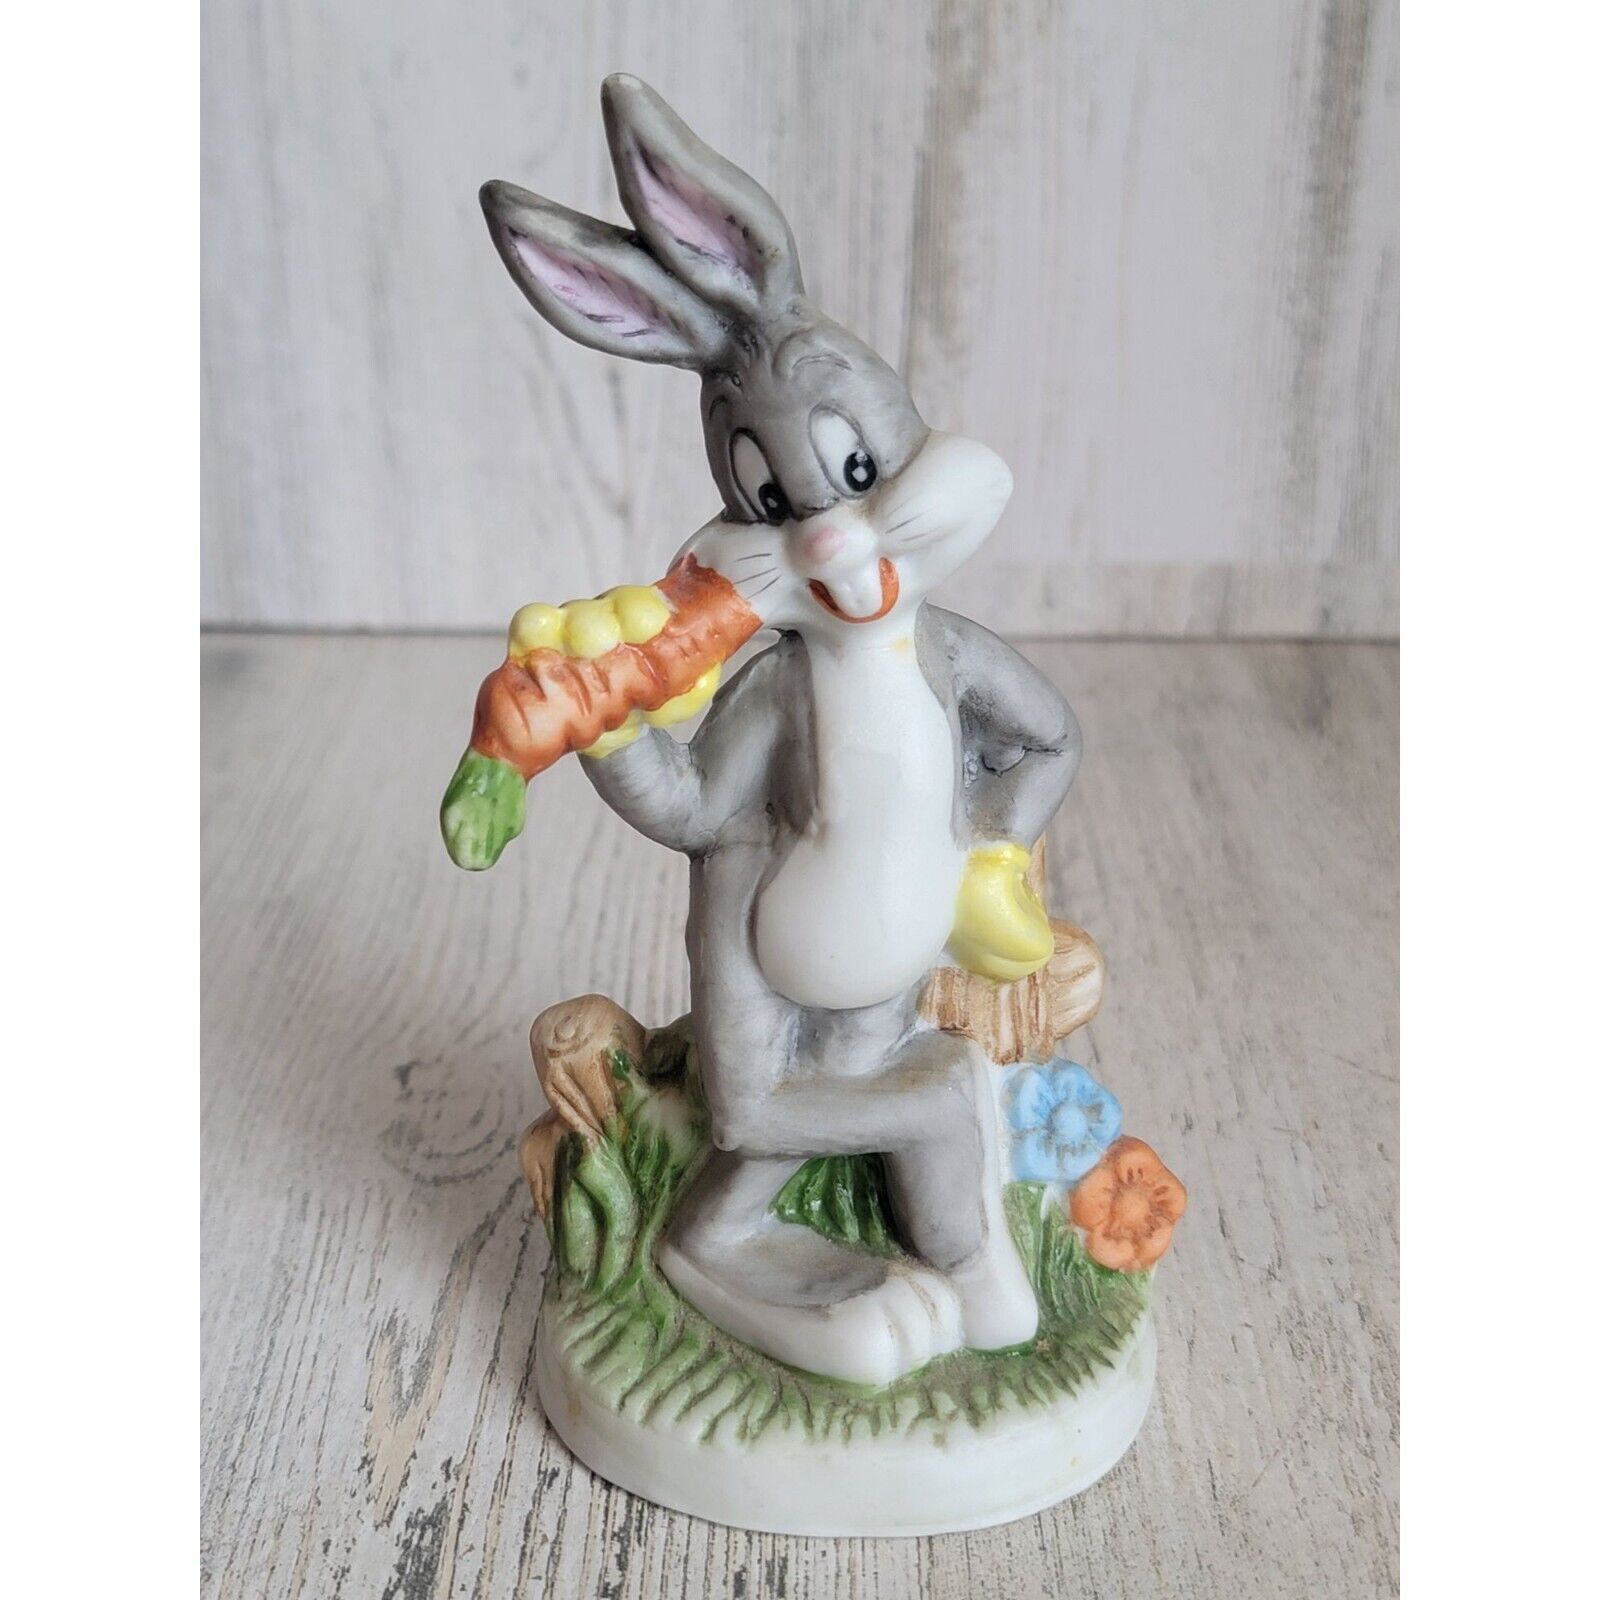 Vintage bugs Bunny 1979 ceramic figure collectible statue